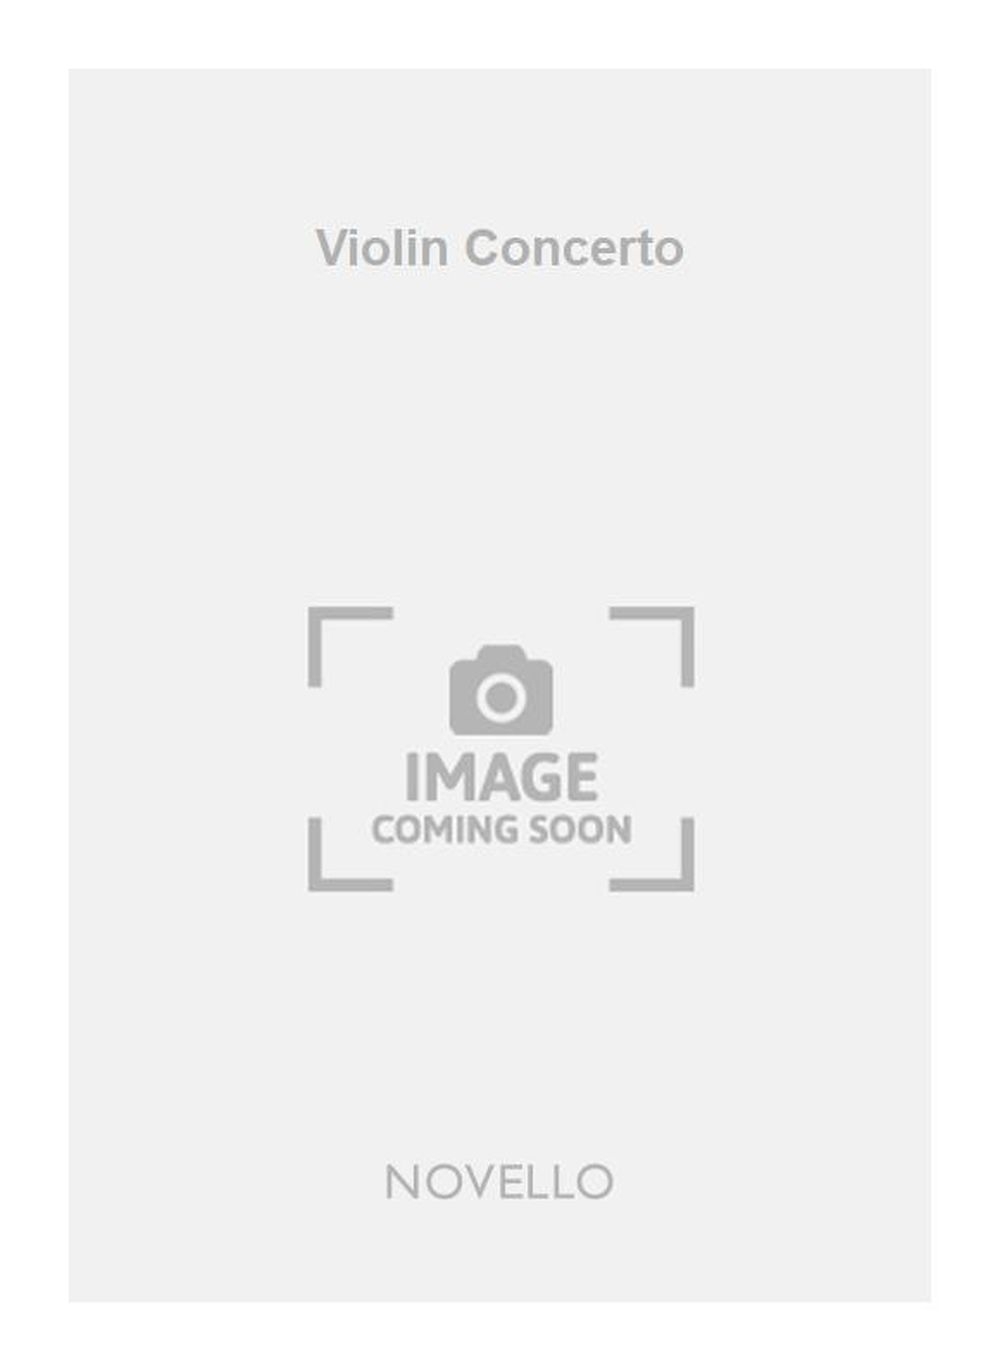 George Dyson: Violin Concerto